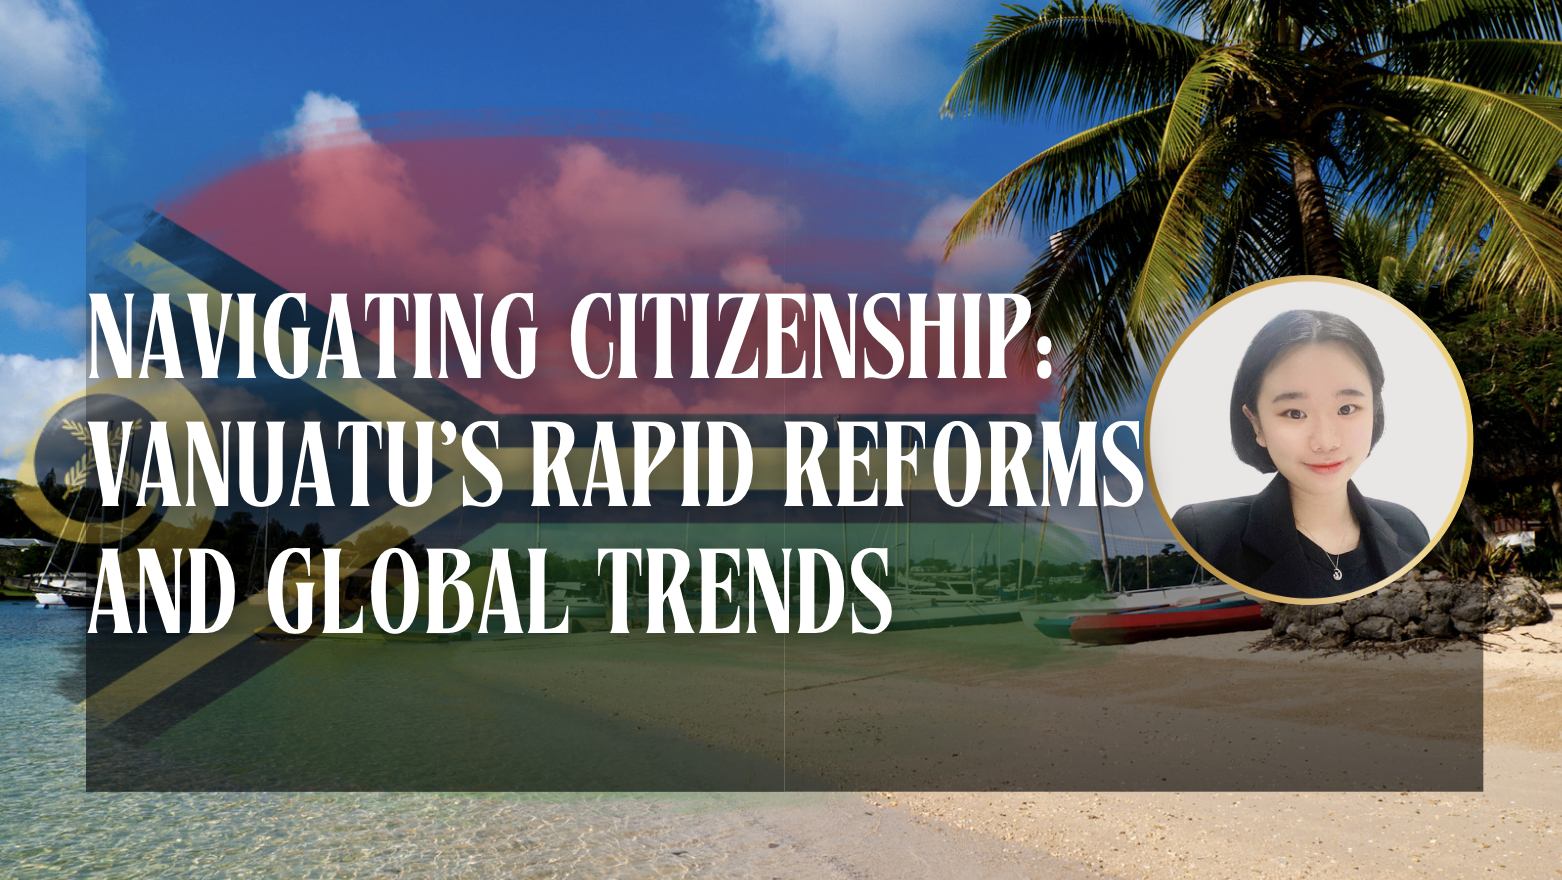 Navigating Citizenship: Vanuatu’s Rapid Reforms and Global Trends